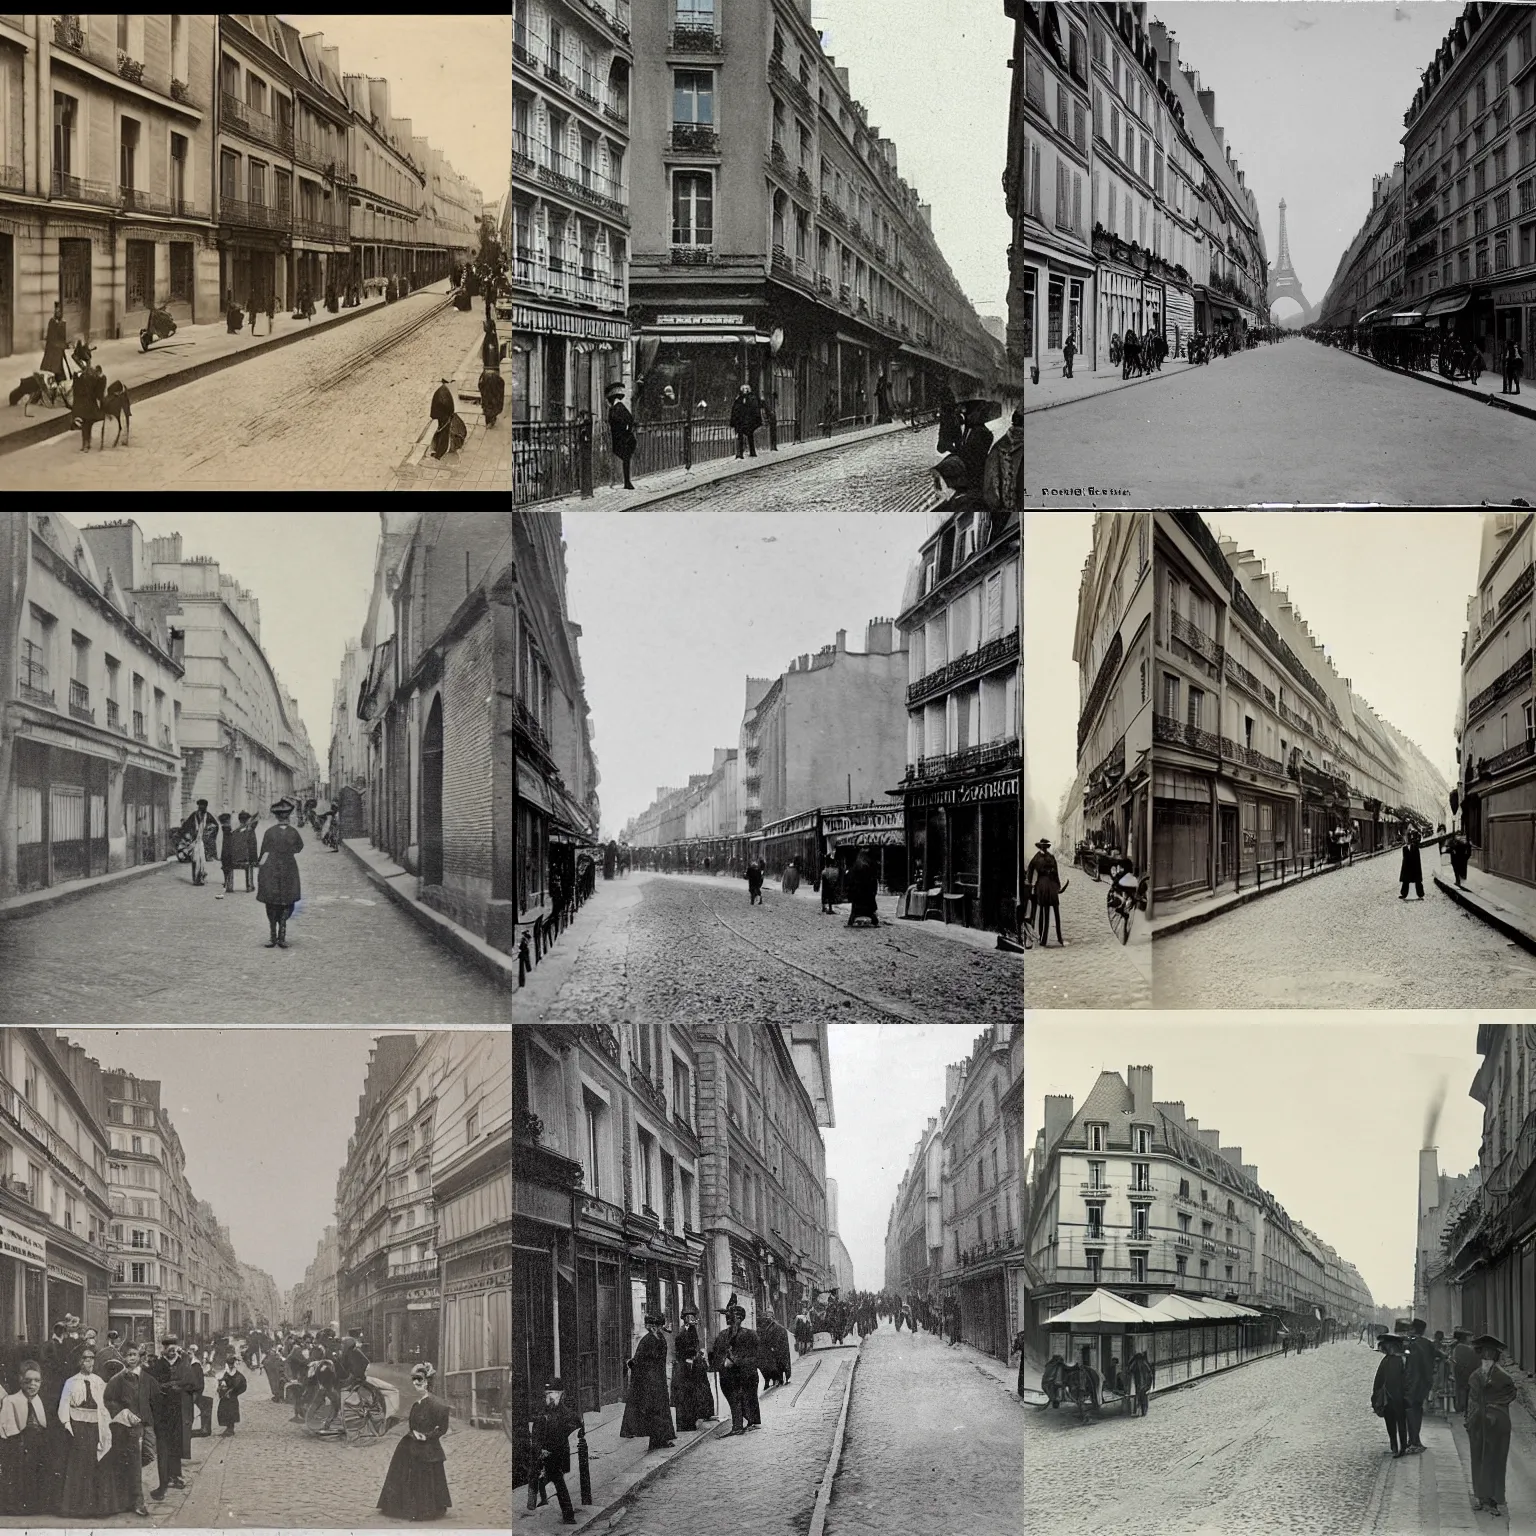 Prompt: 1 8 8 0 s photo of a paris street